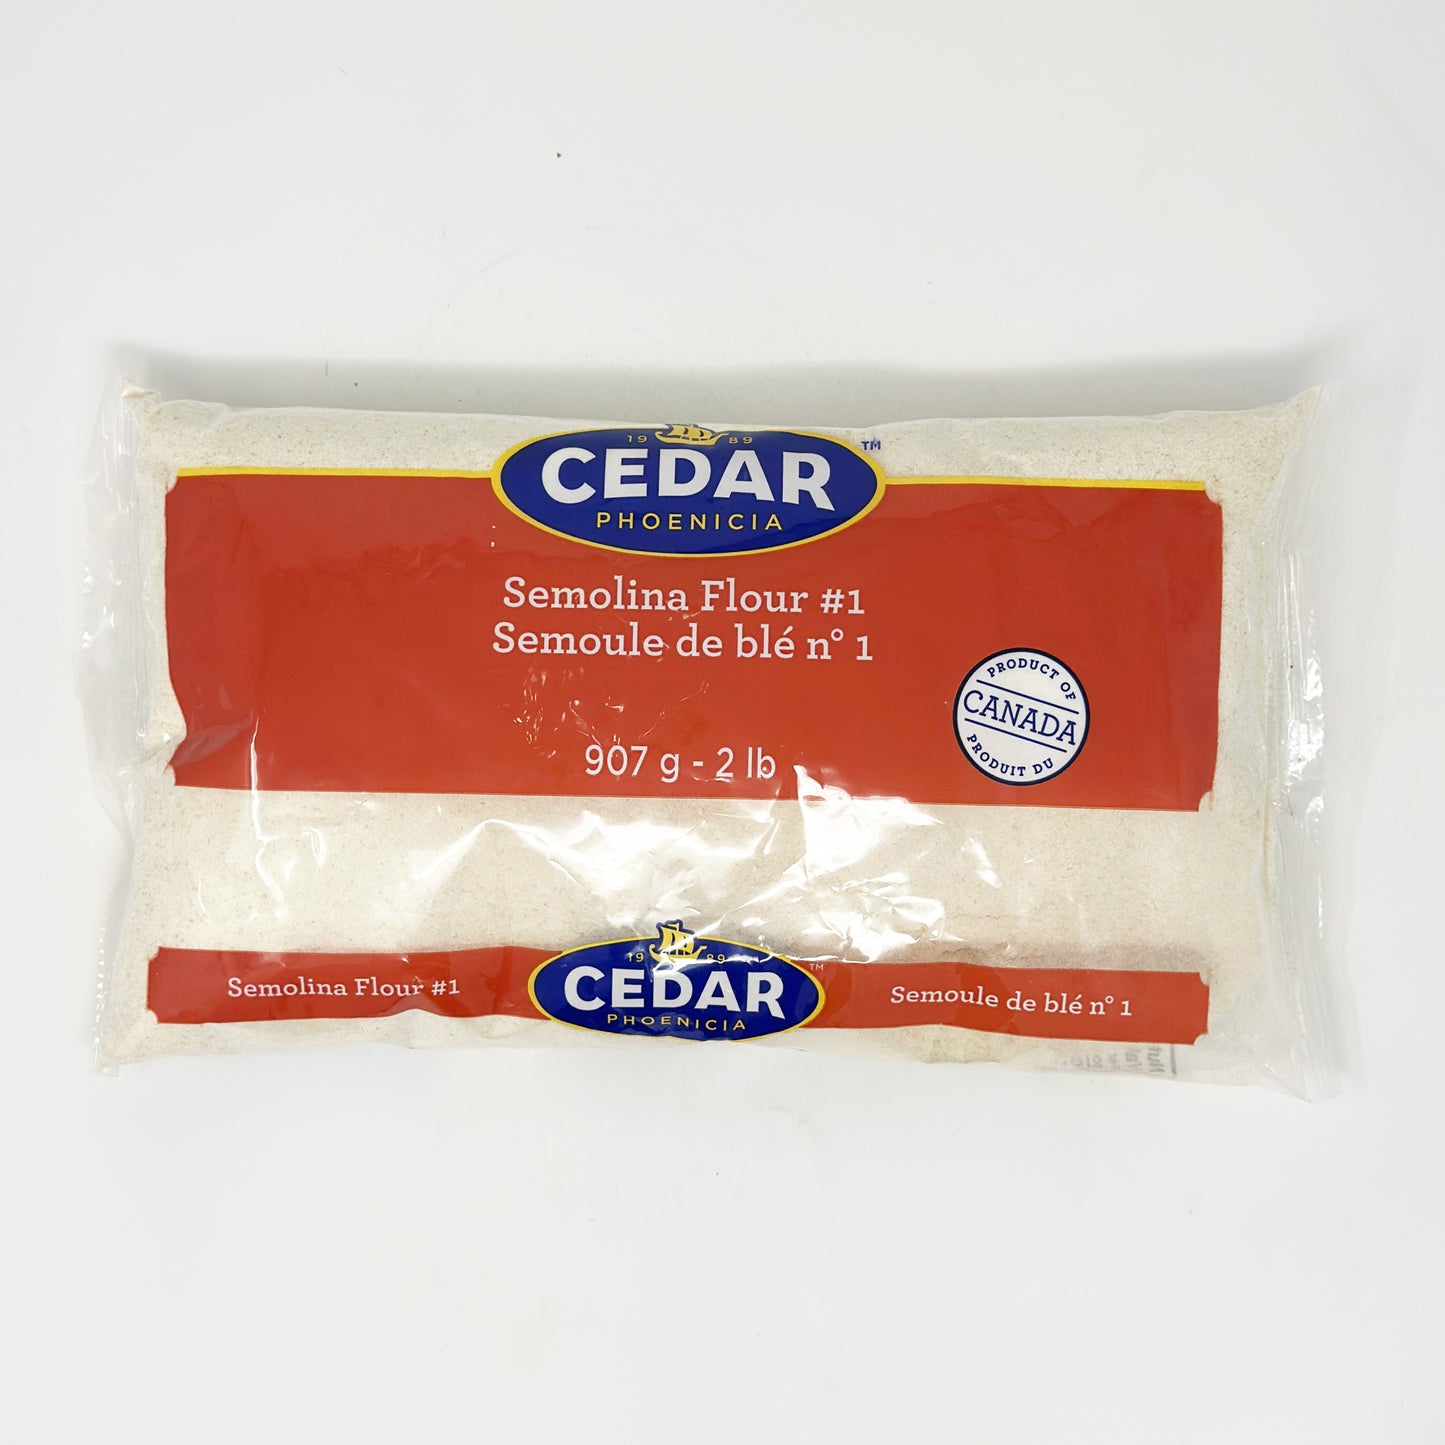 Cedar Semolina Flour #1 32 oz